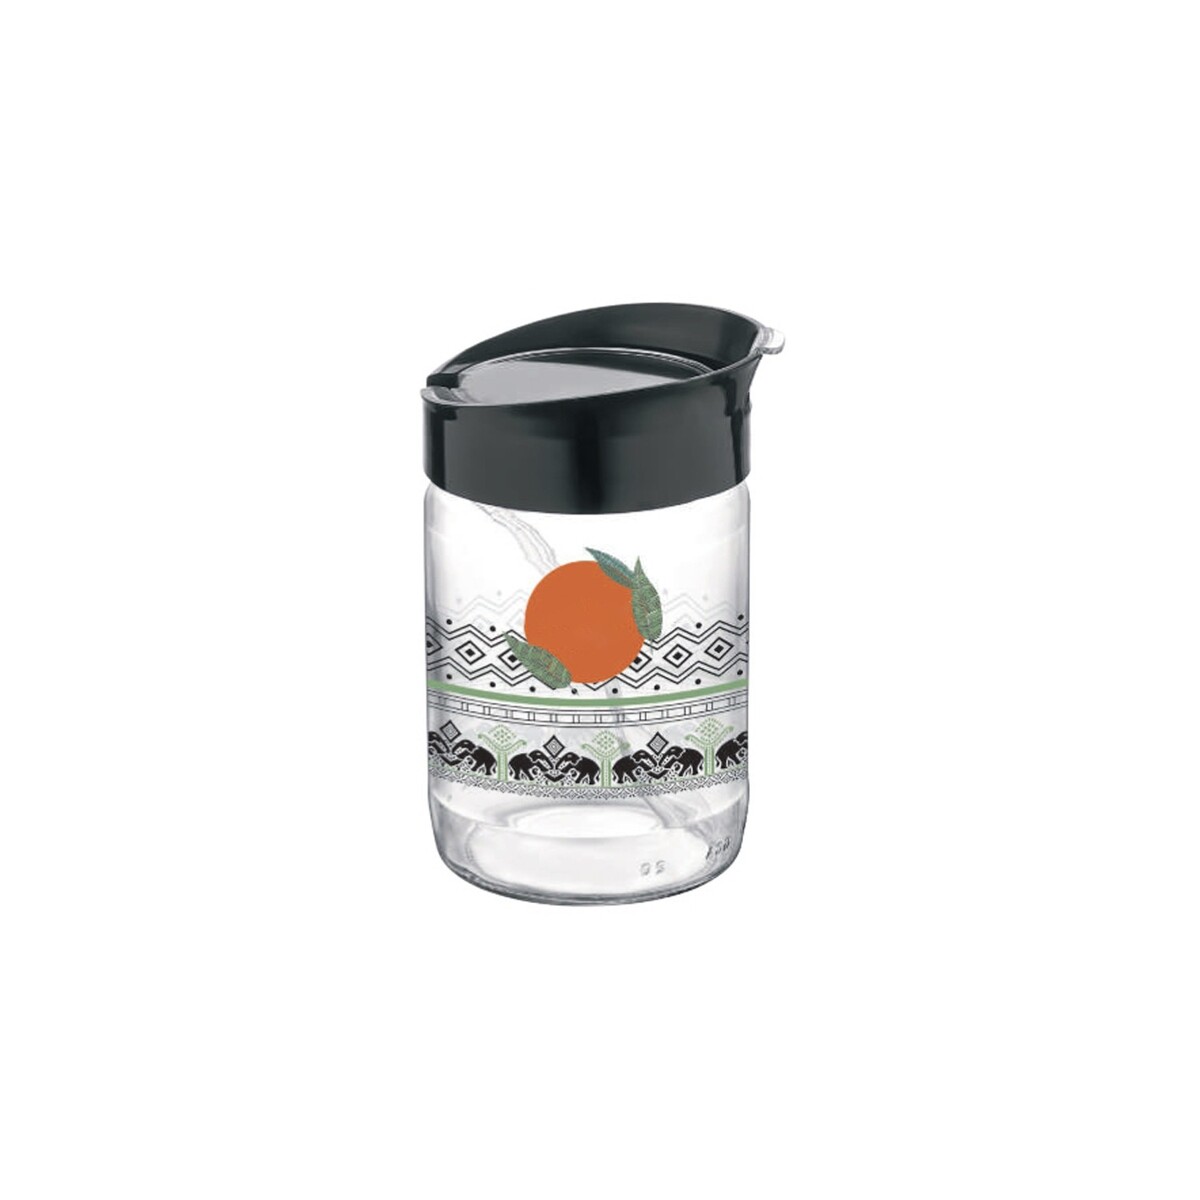 Renga Victory Spice Jar 580ml (Pack of 1)